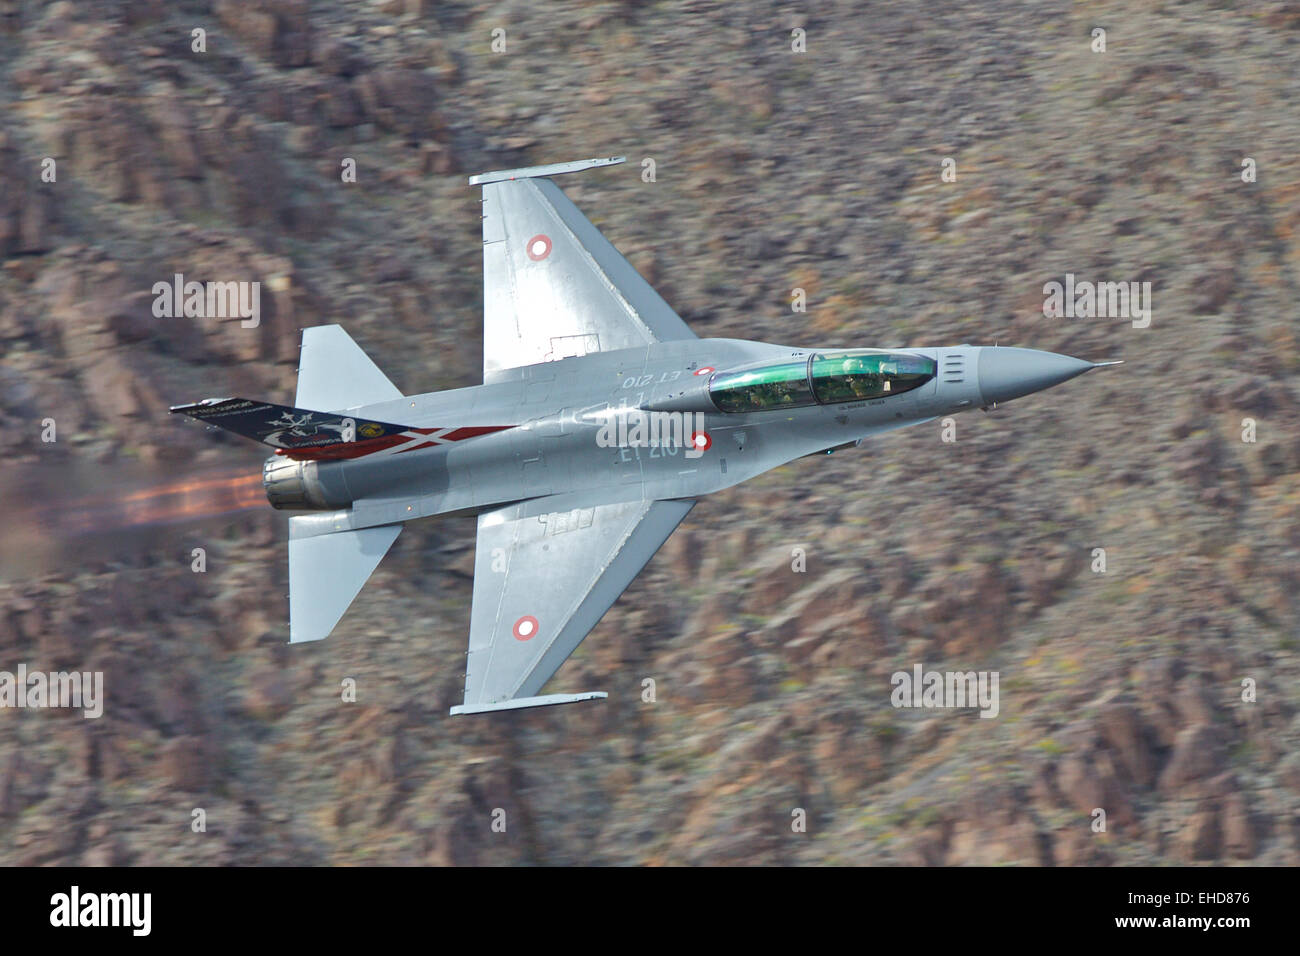 Nahaufnahme Bild des Royal Danish Air Force f-16 Fighting Falcon Kampfjet, Reheat steigen In Rainbow Canyon auf niedrigem Niveau. Stockfoto